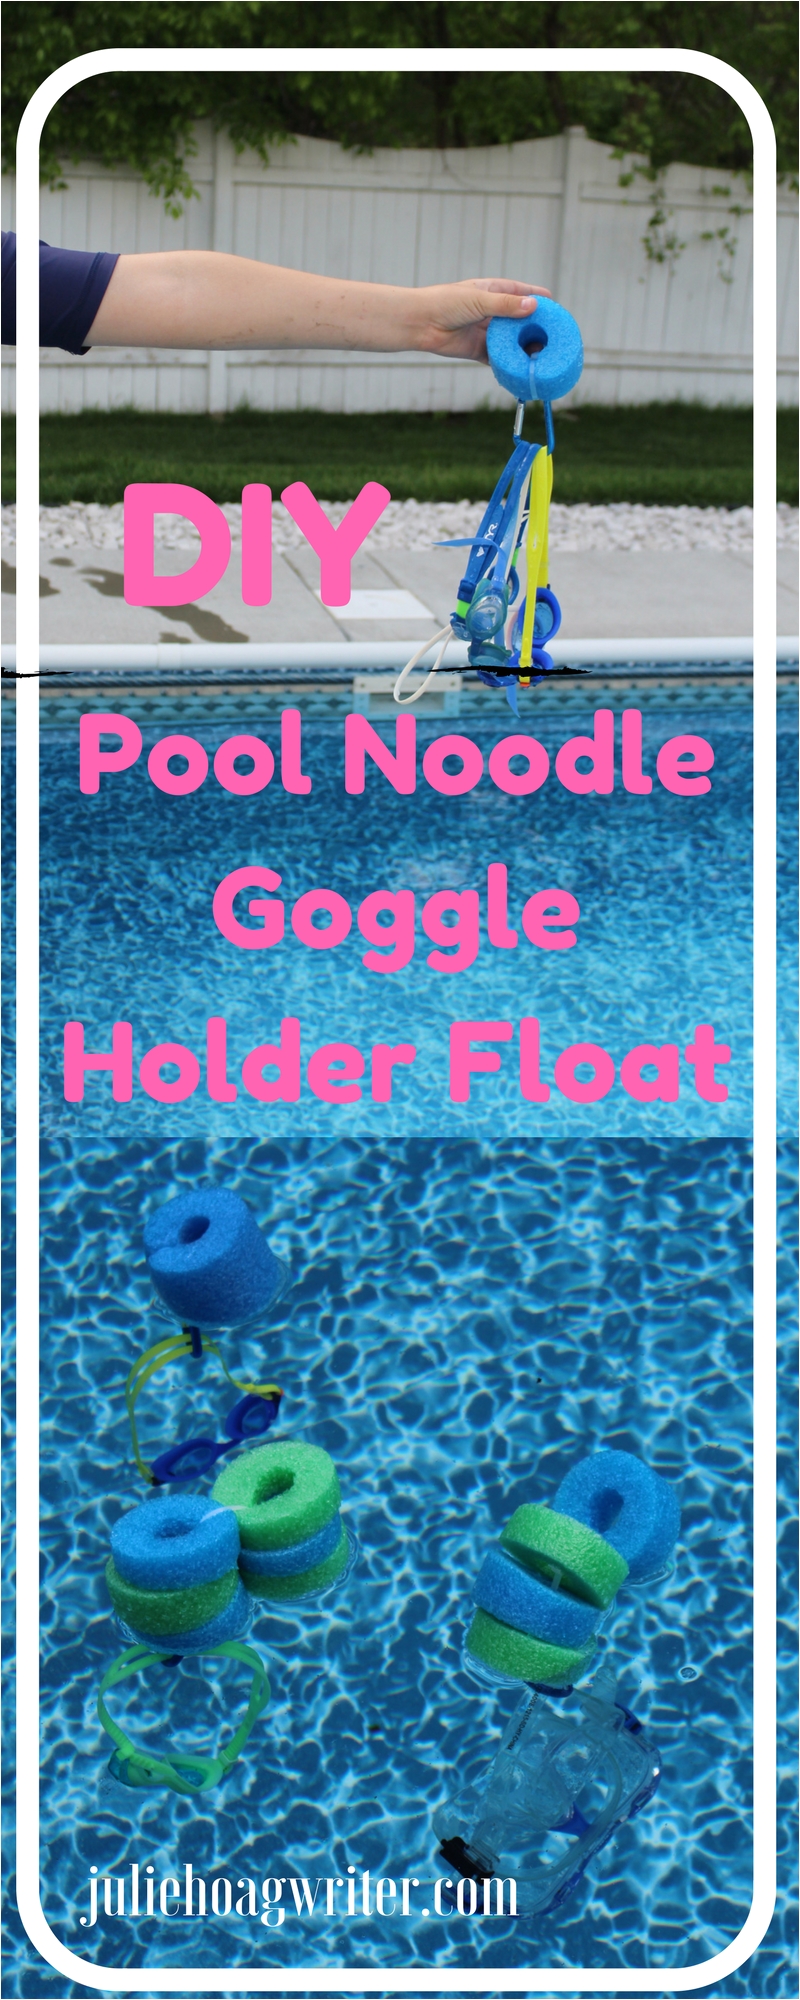 diy pool noodle goggle holder float family kids pool ideas pools backyard